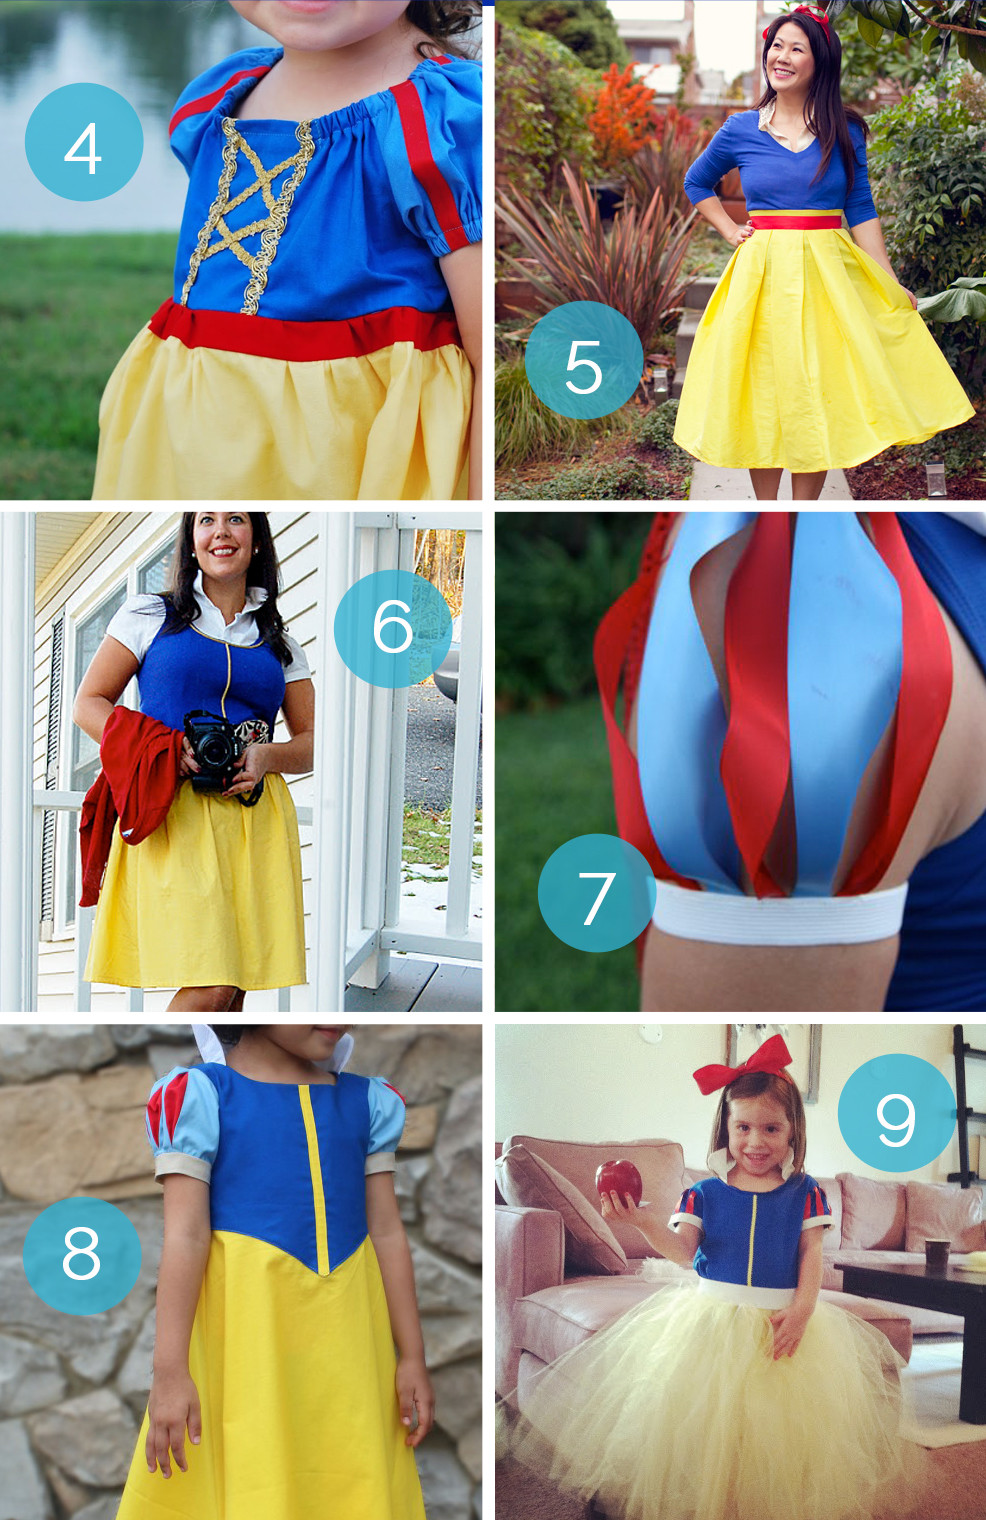 DIY Snow White Costume Toddler
 huge list of DIY princess costumes DIY Snow white costume